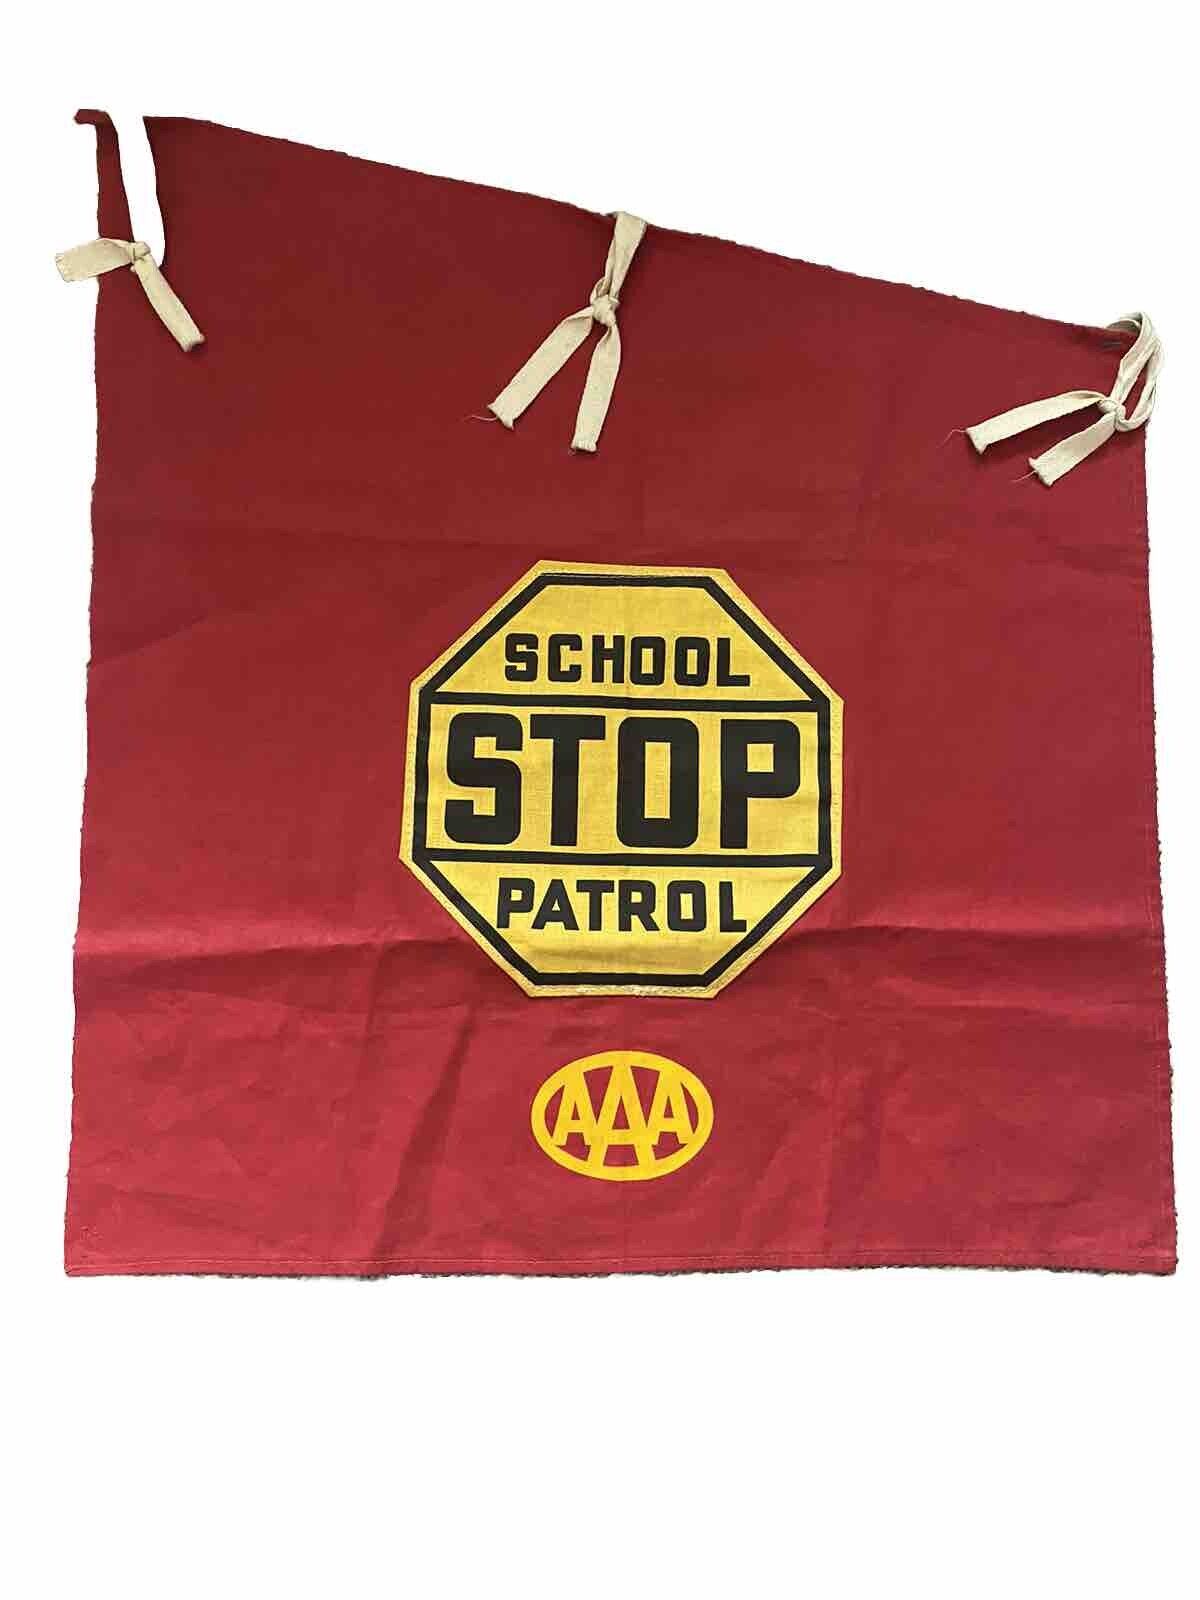 Rare Vintage School Safety Patrol Crossing Guard AAA Fabric Flag